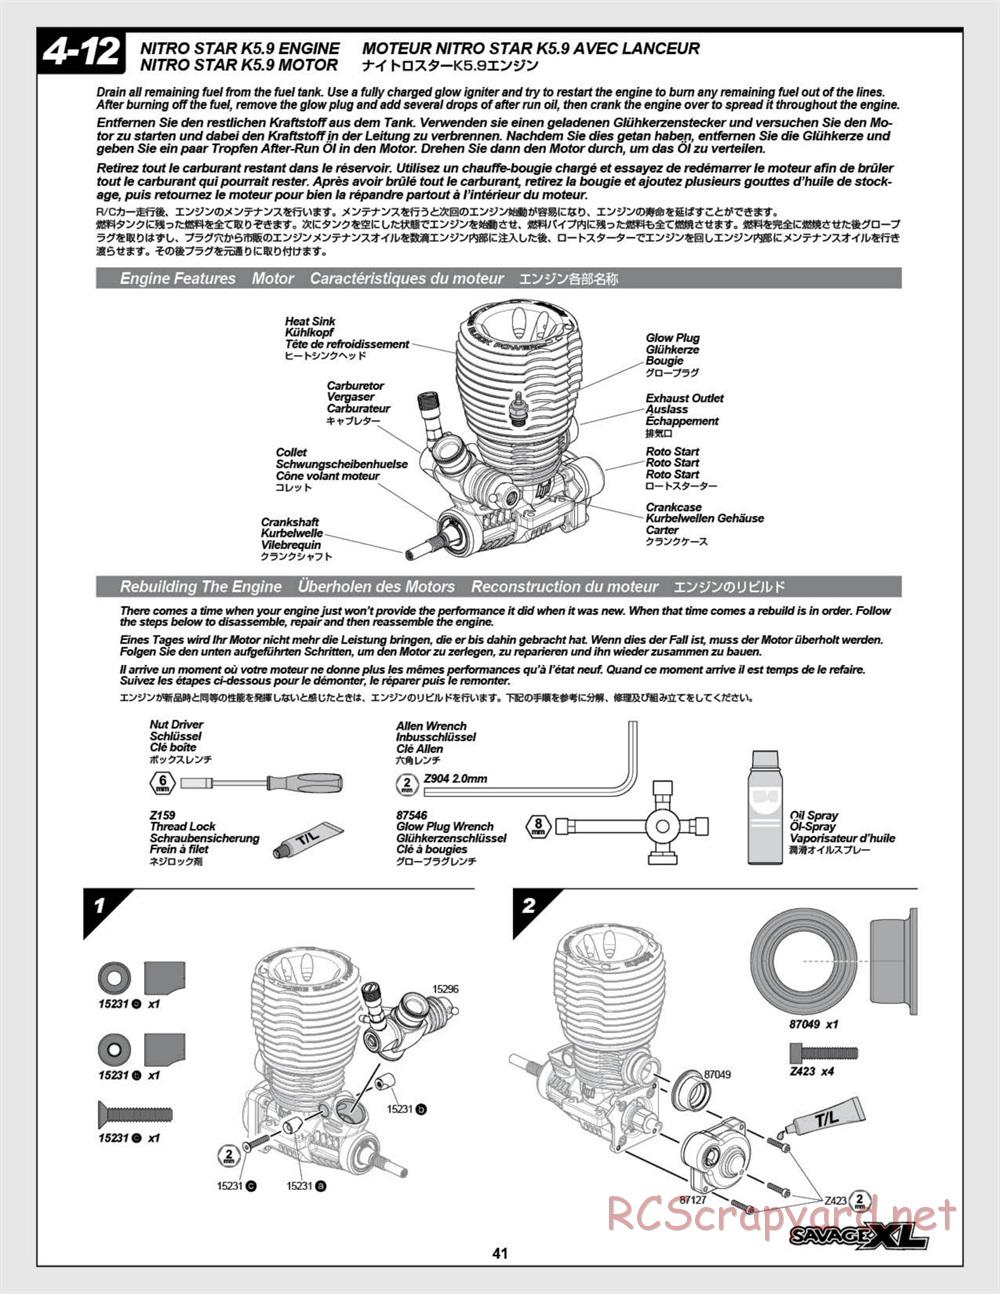 HPI - Savage XL 5.9 - Manual - Page 41